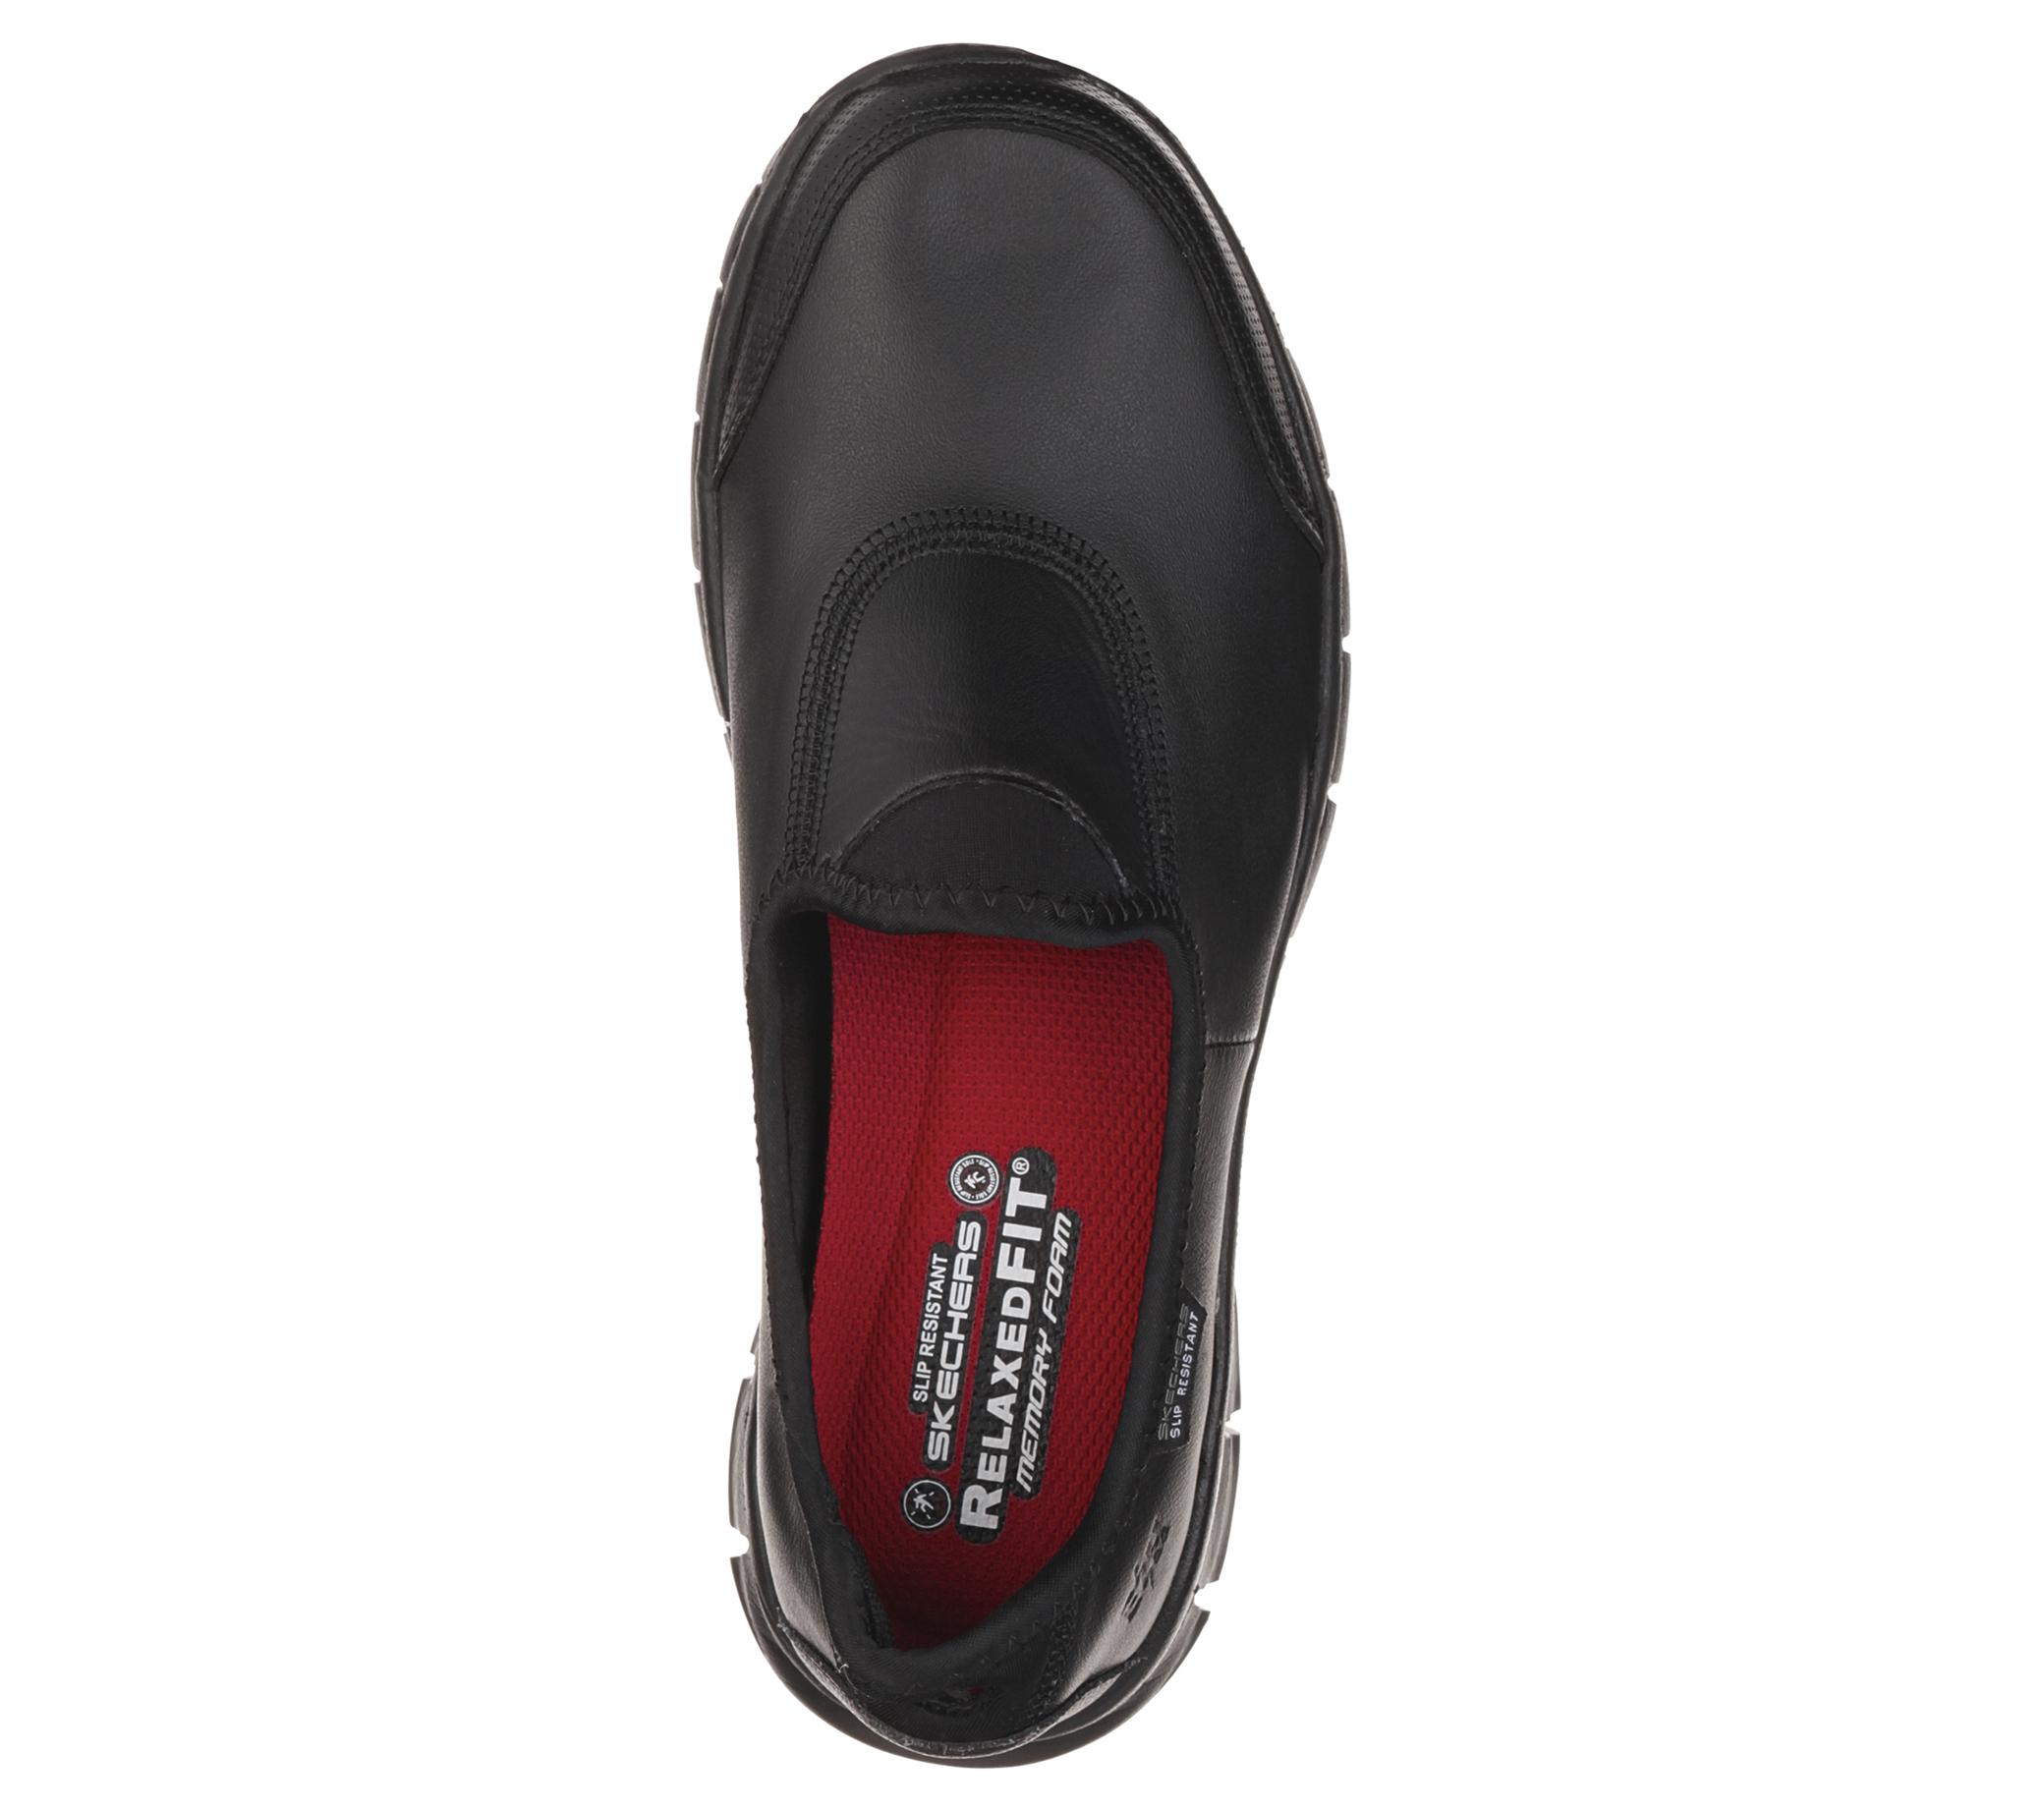 skechers slip resistant memory foam shoes